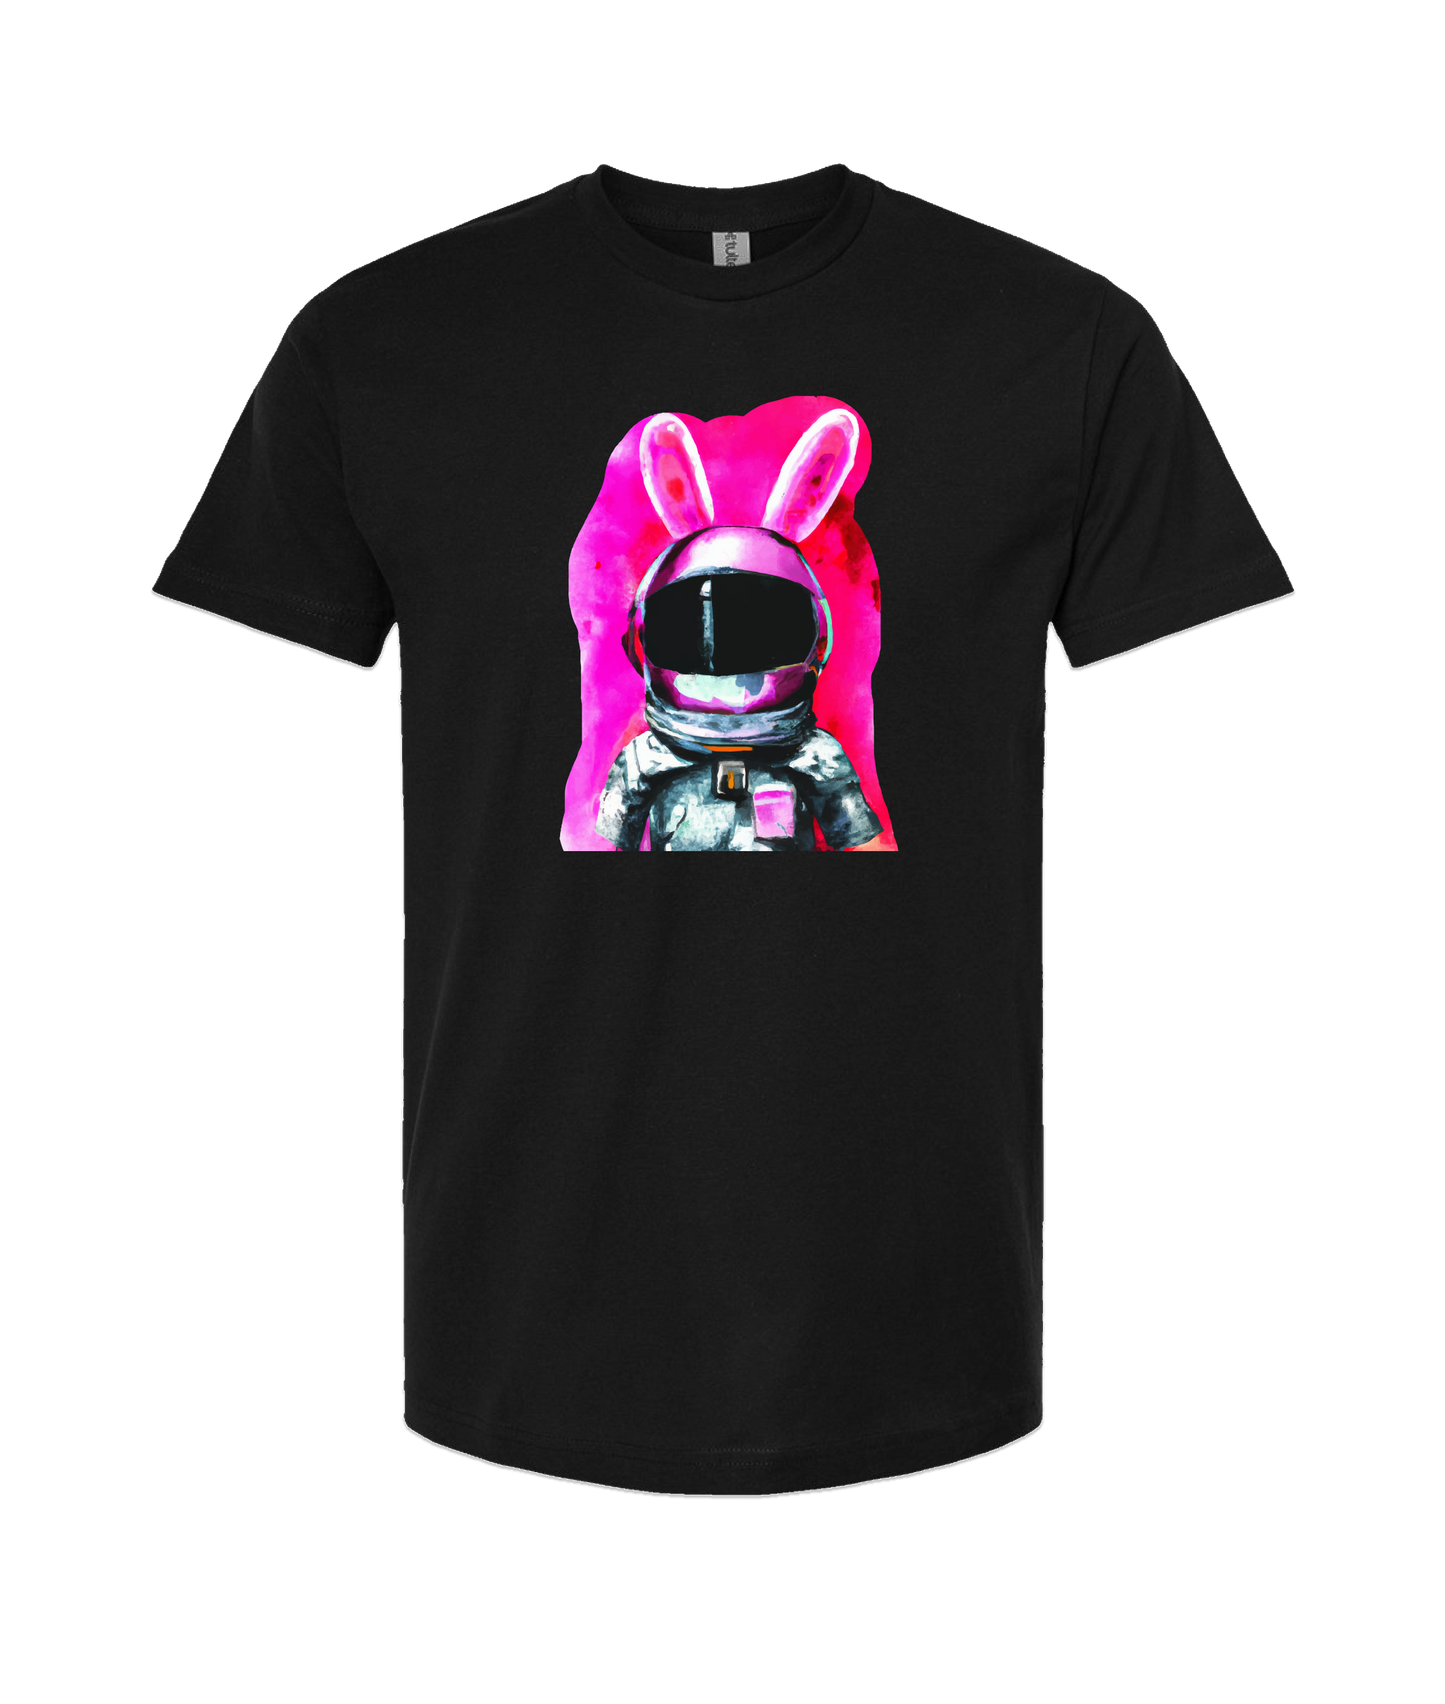 Legendarious - SPACE RABBIT - Black T-Shirt